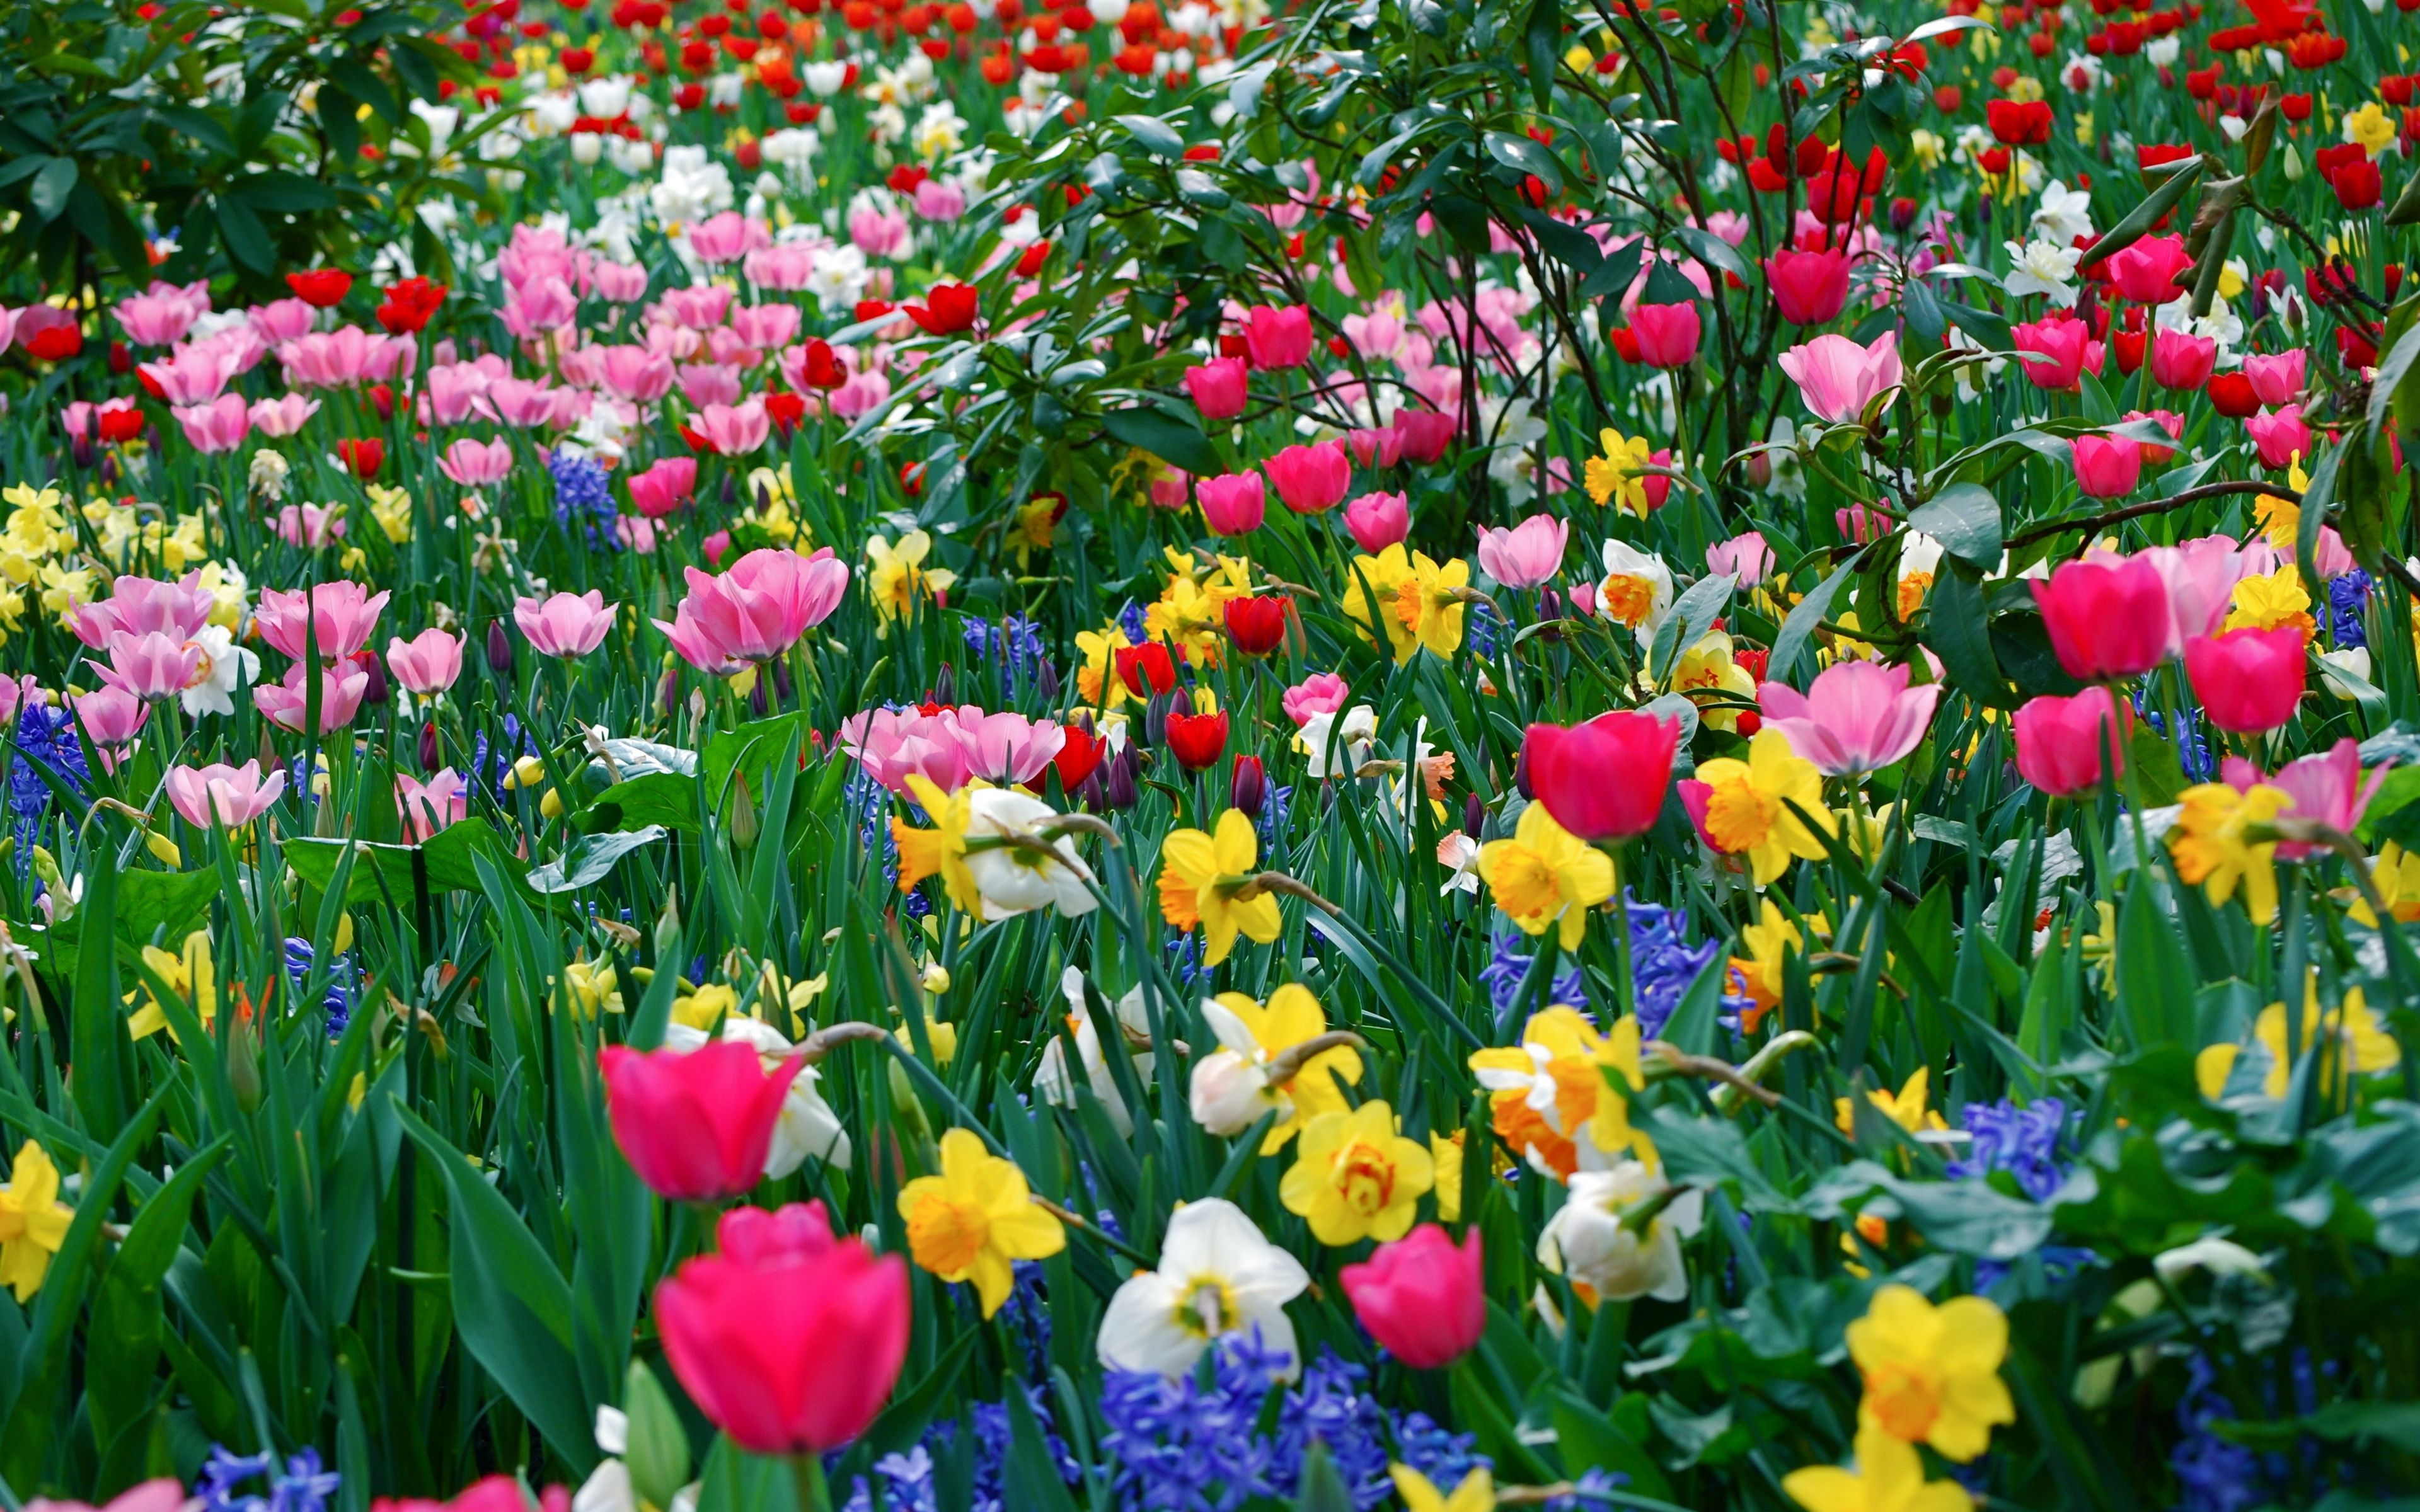 Download wallpaper 3840x2400 tulips, daffodils, flowers, meadow